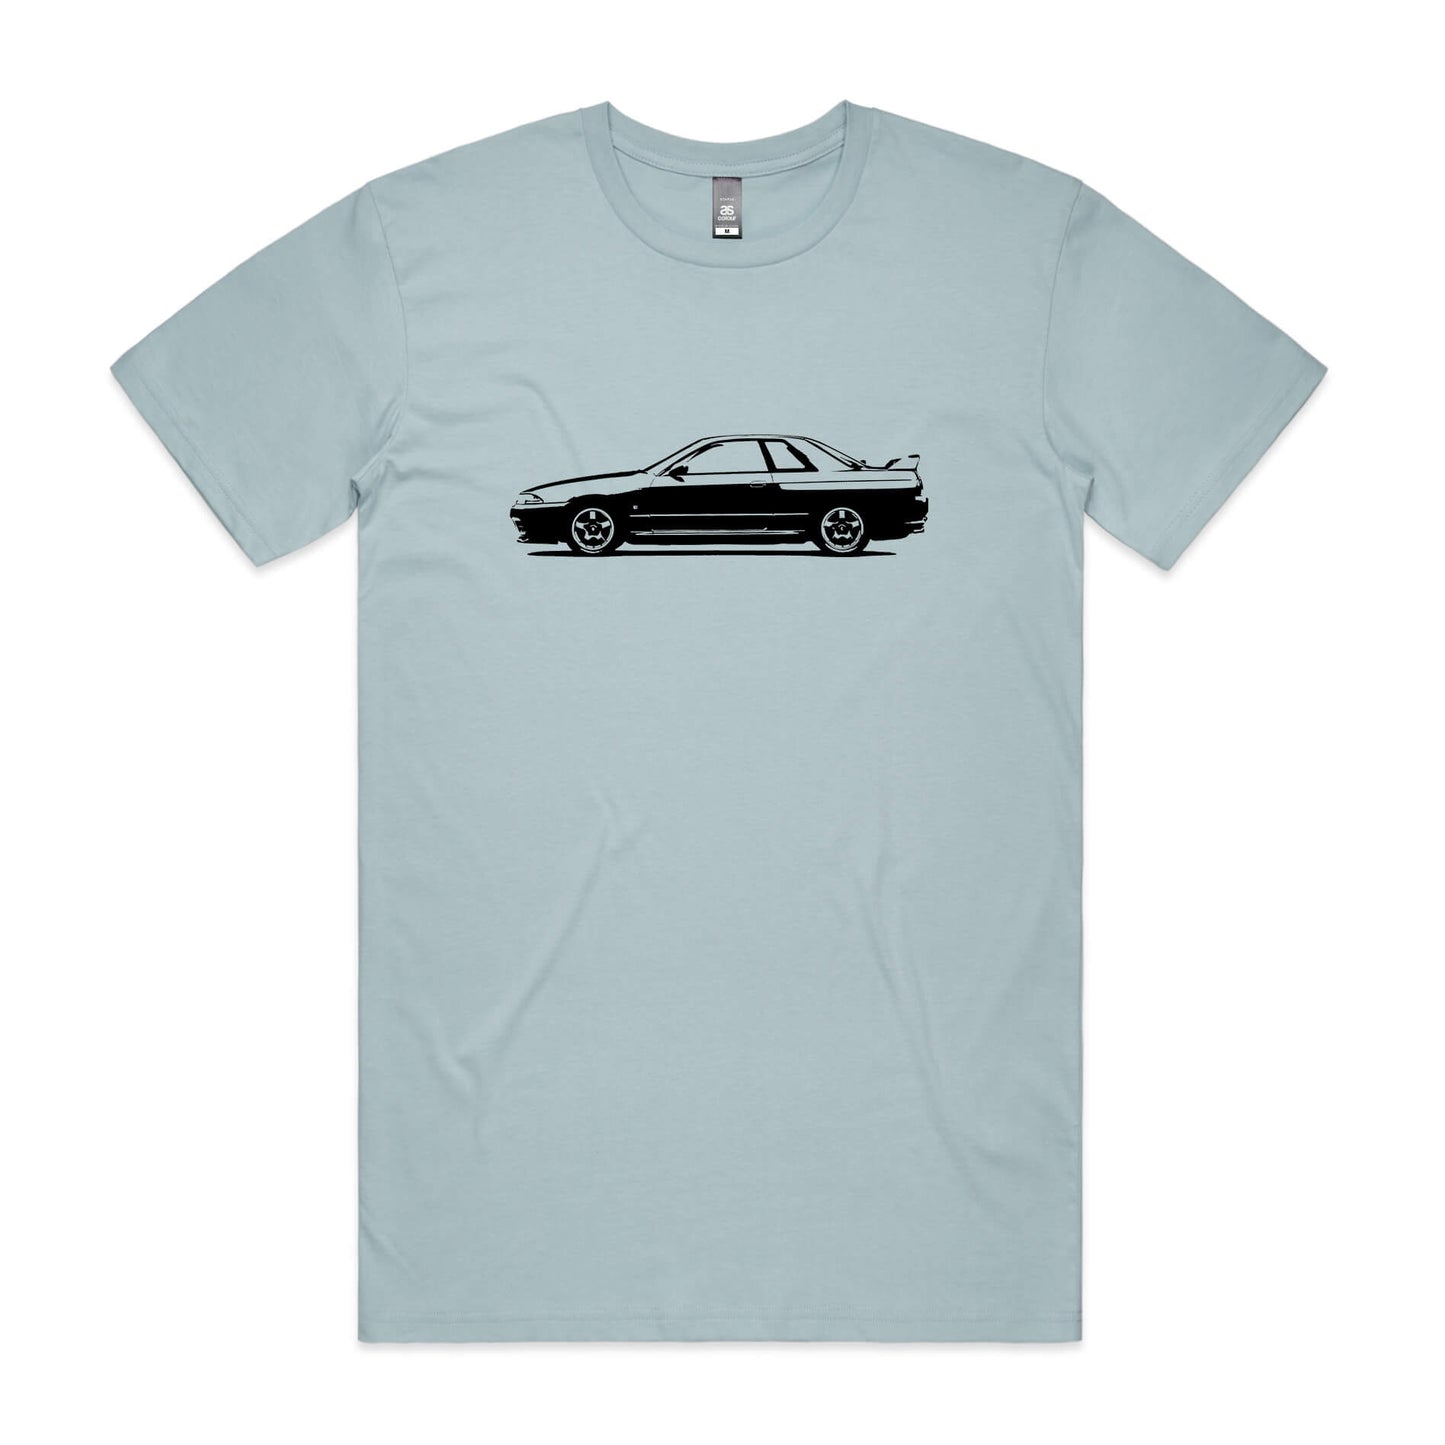 Nissan R32 GT-R Skyline T-Shirt